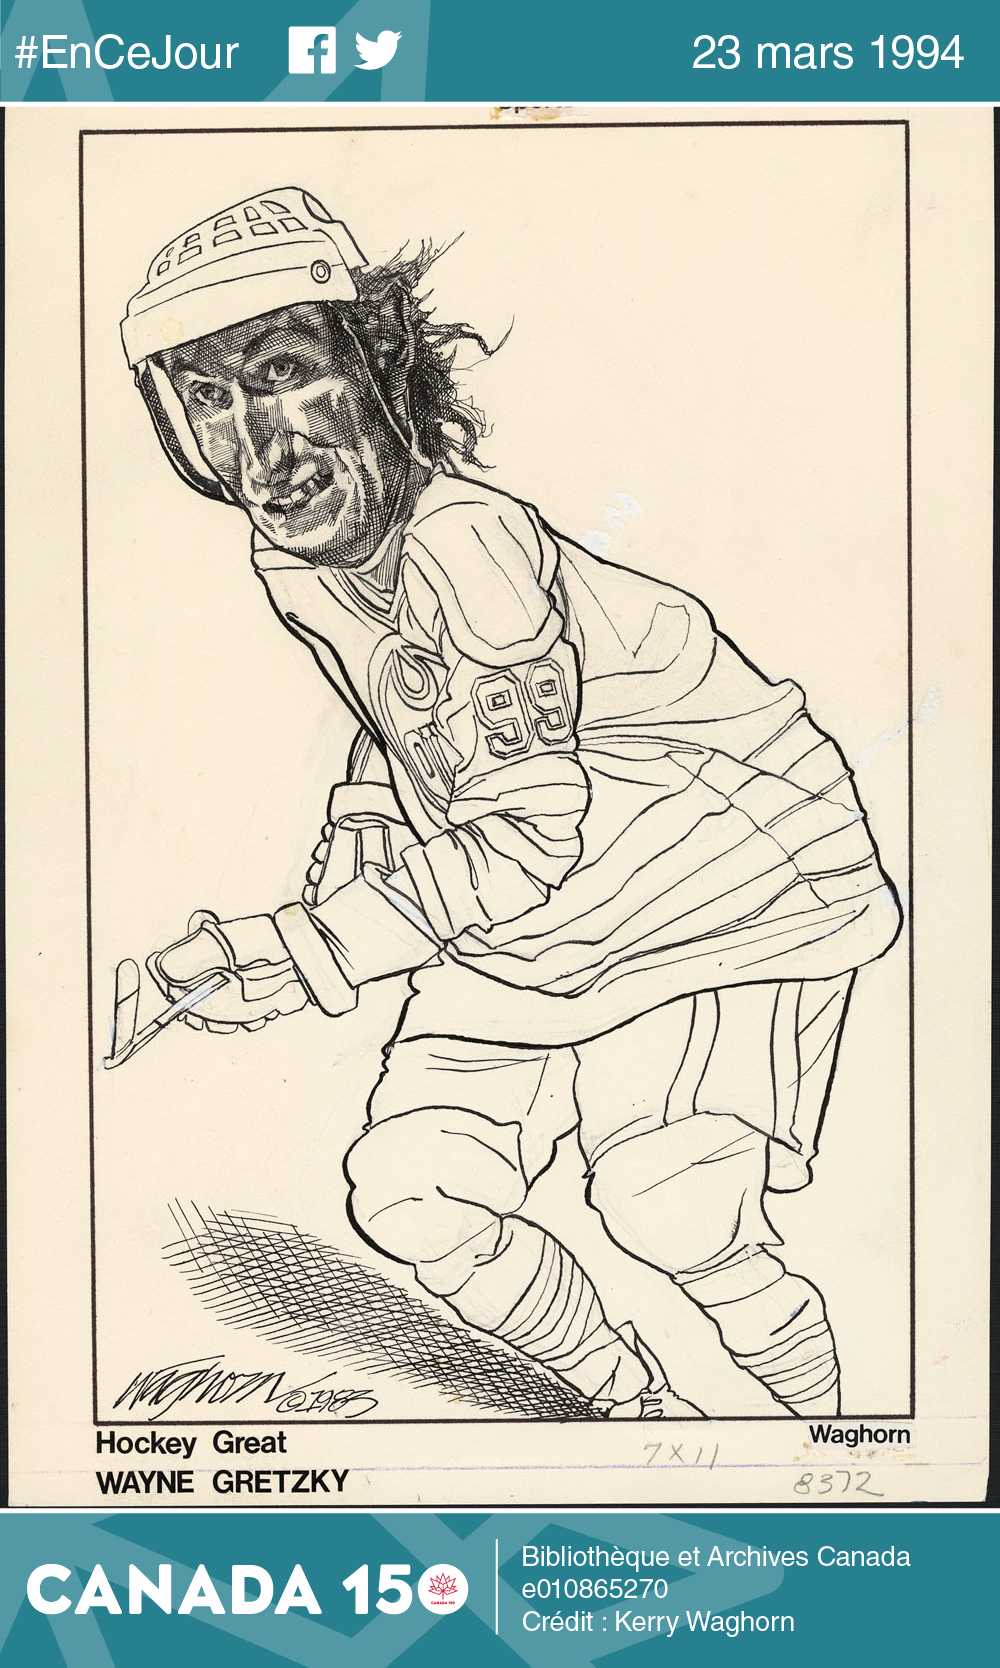 Caricature de Wayne Gretzky jouant au hockey, 1983.